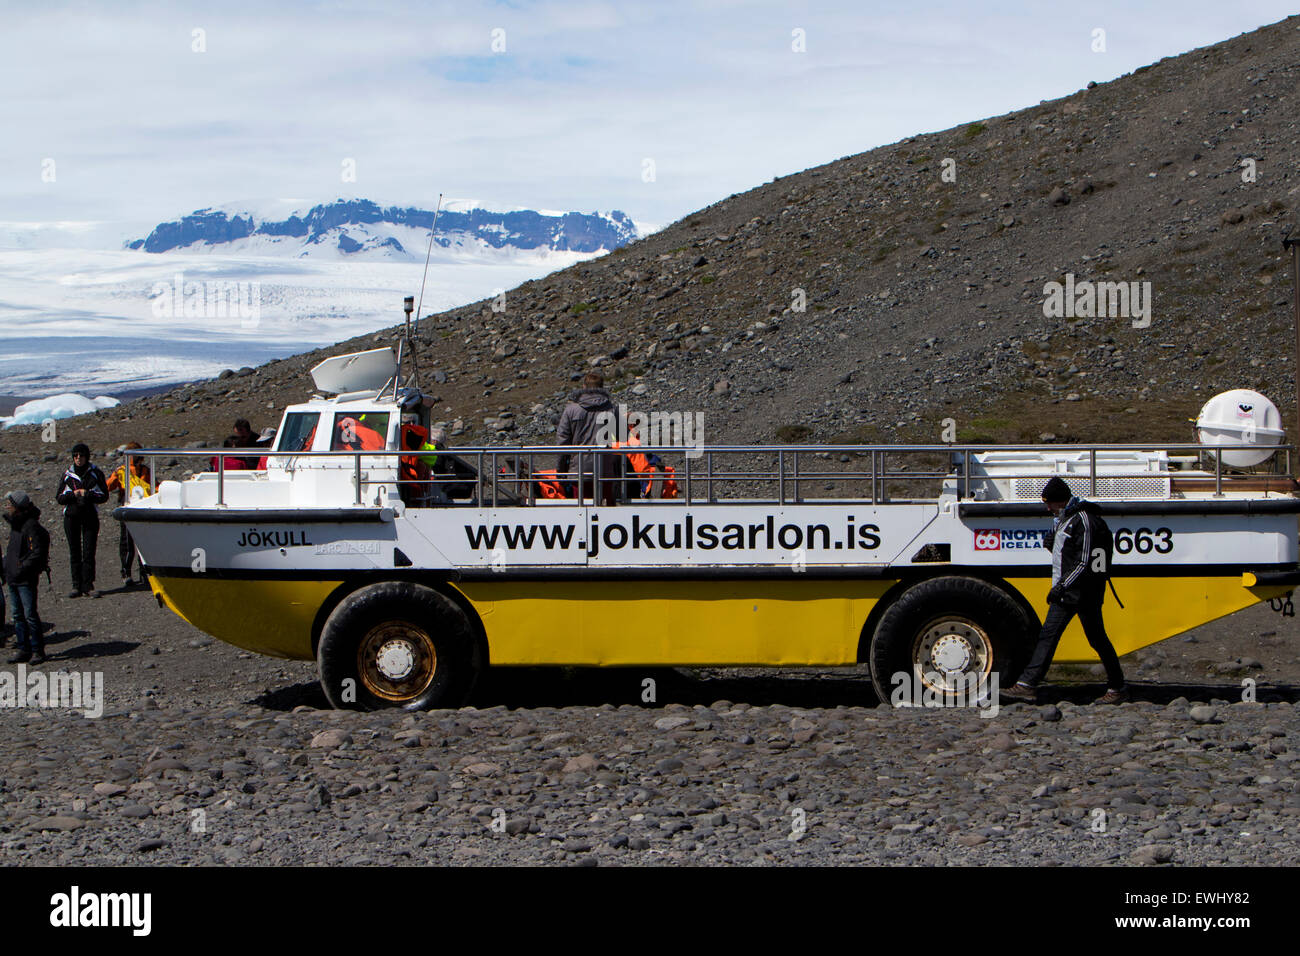 Veicolo anfibio tour presso Jokulsarlon laguna glaciale Islanda Foto Stock